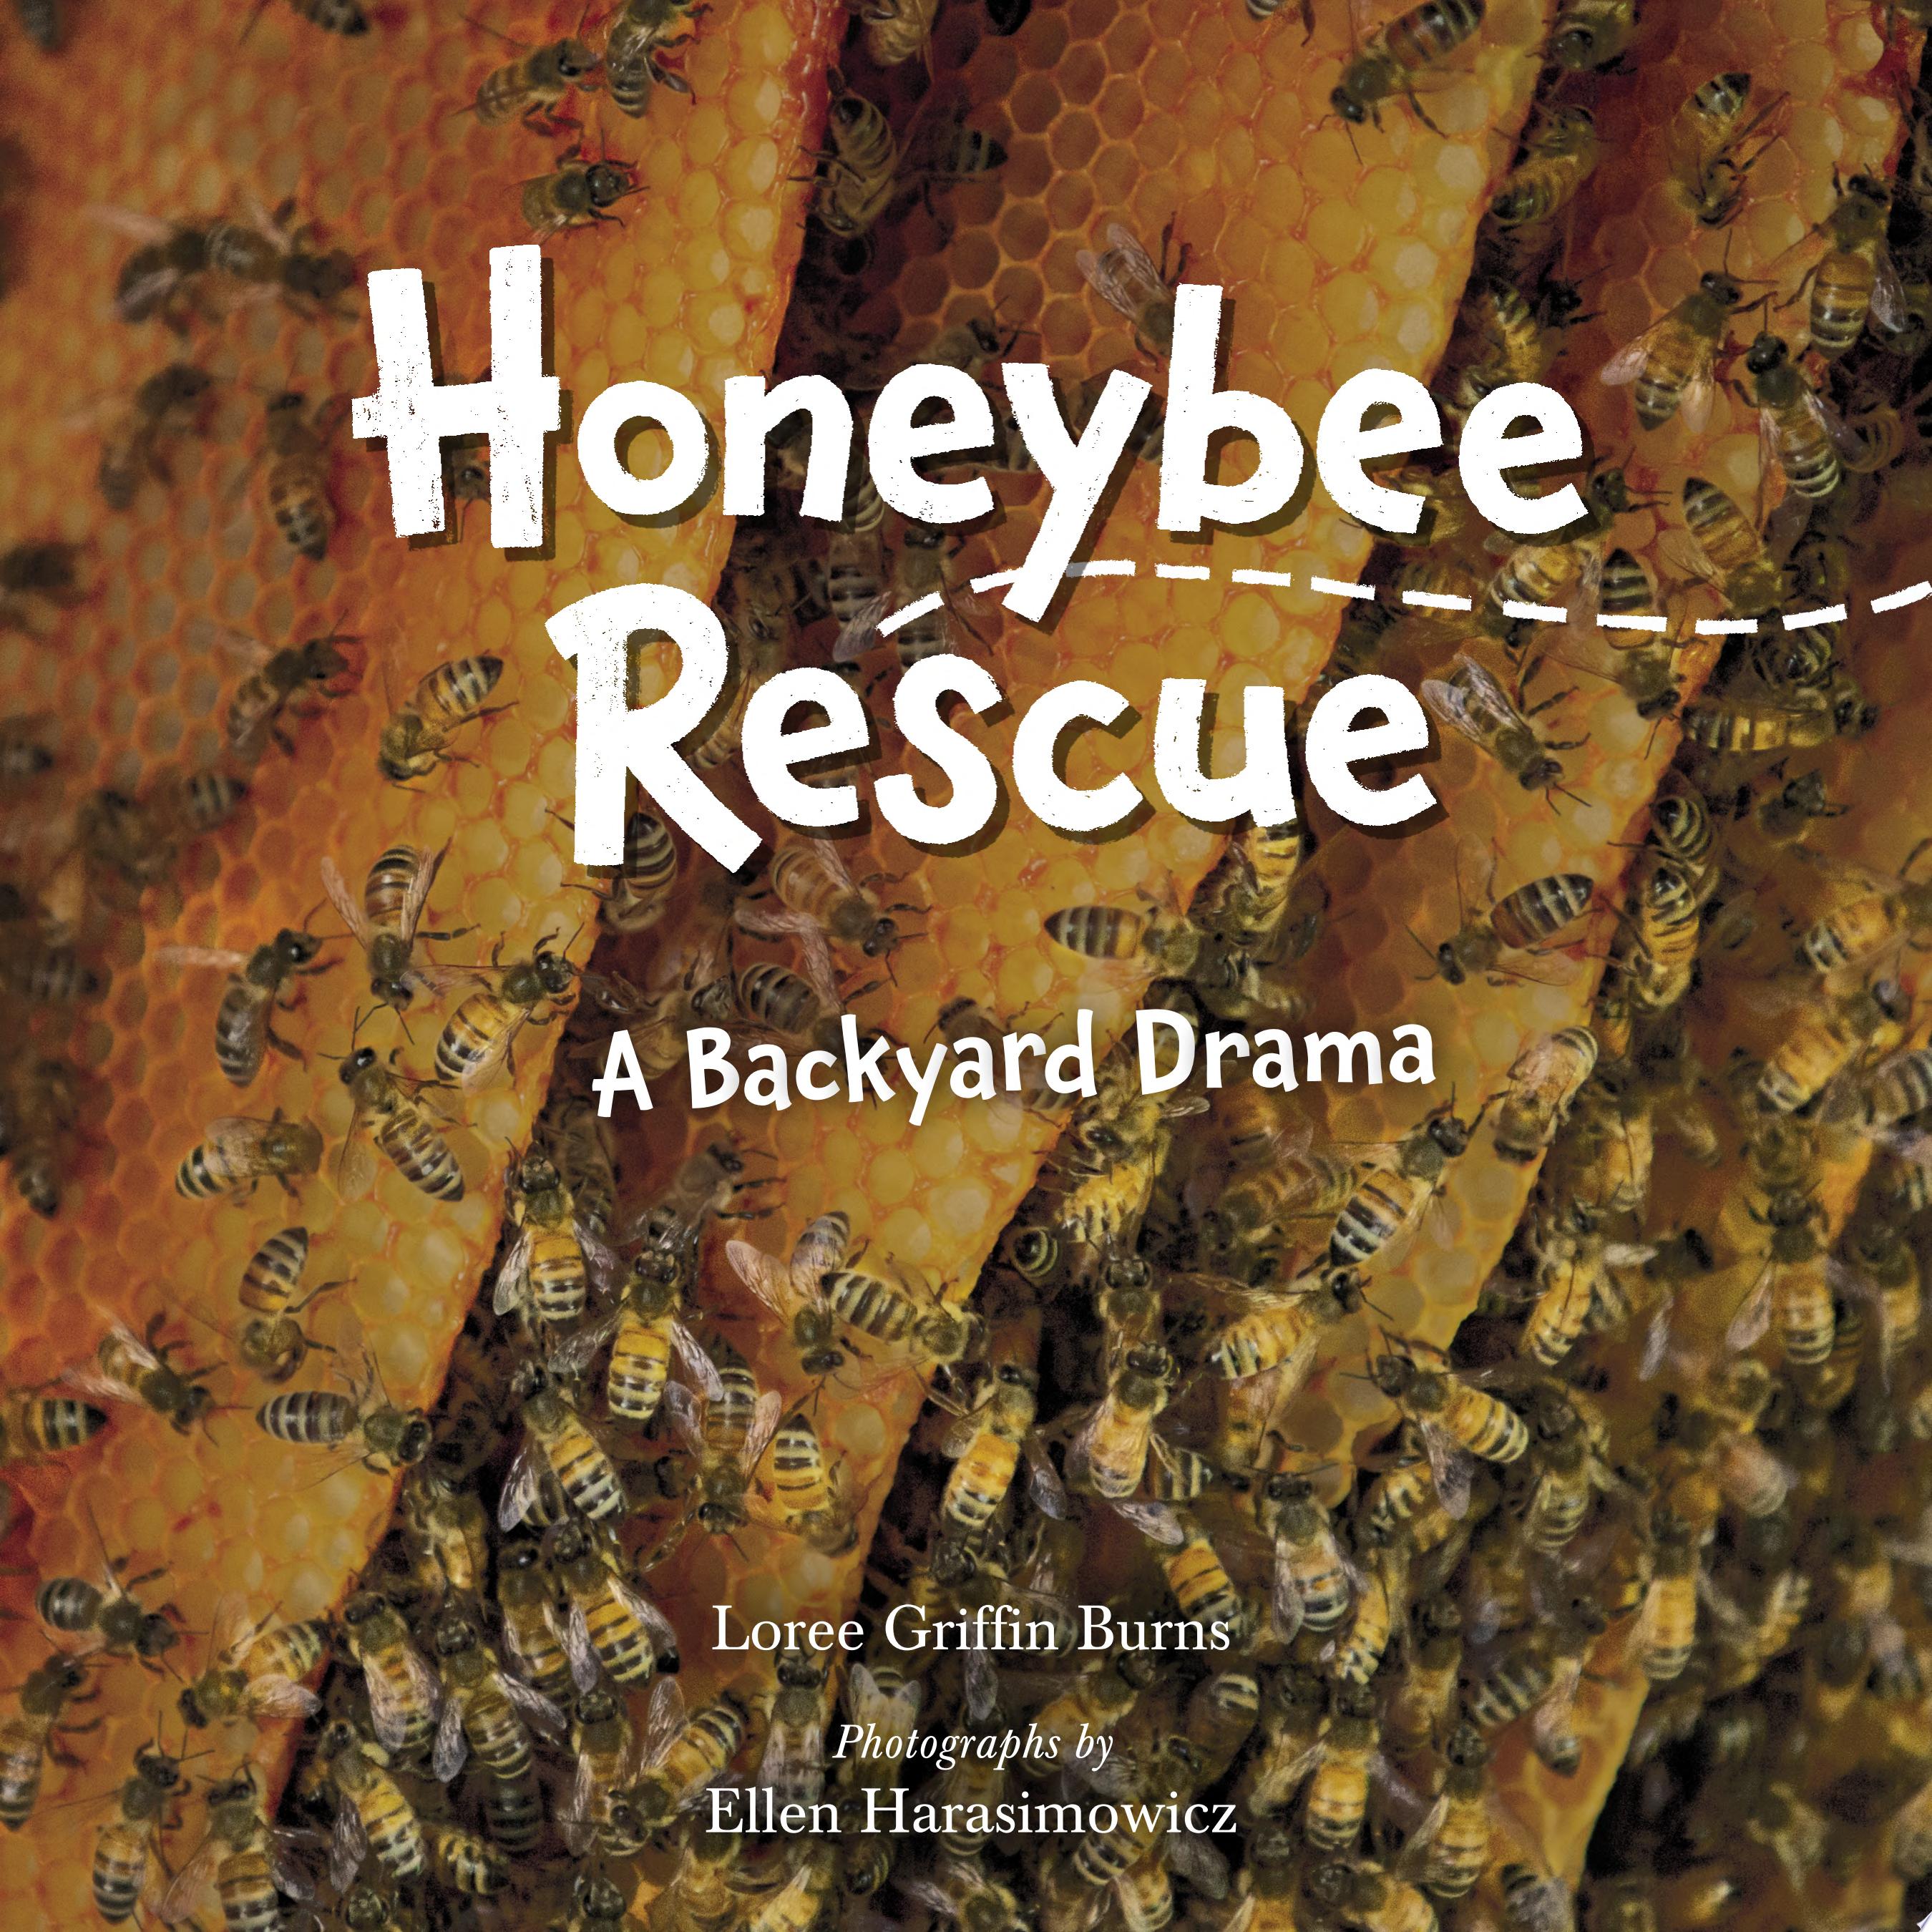 Image for "Honeybee Rescue"